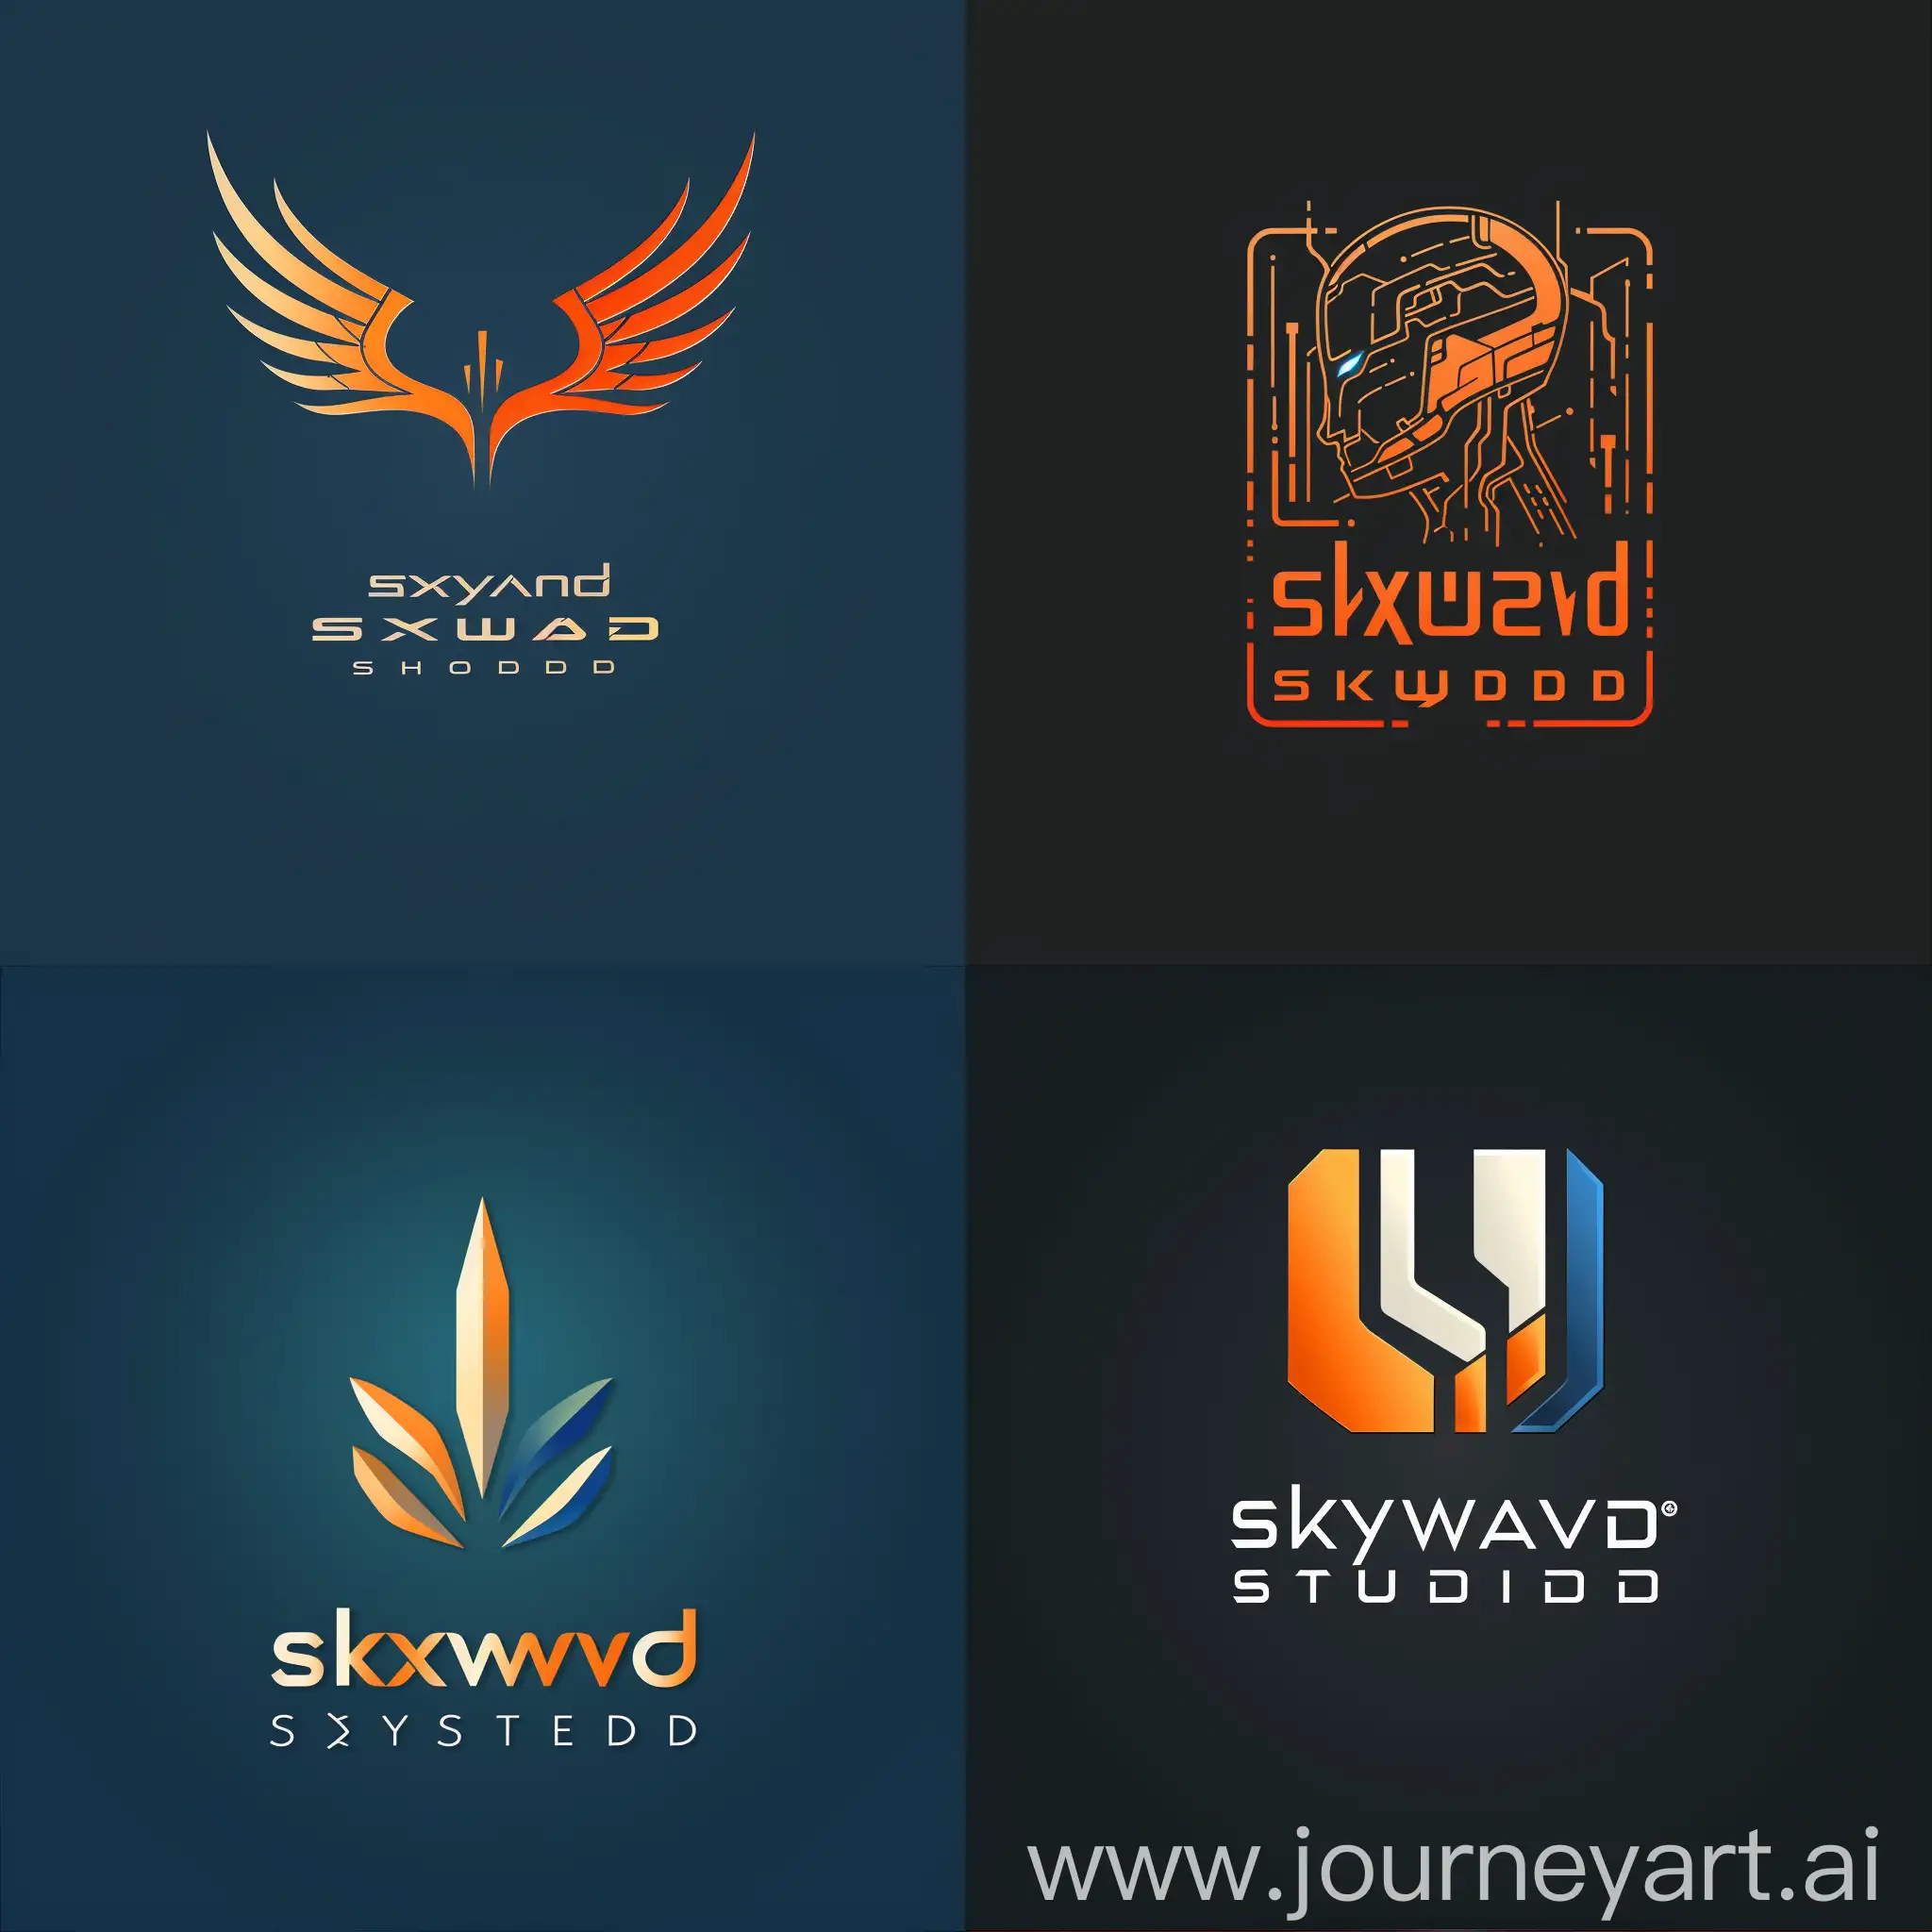 Futuristic-Skyward-Studios-Logo-in-Vibrant-Blue